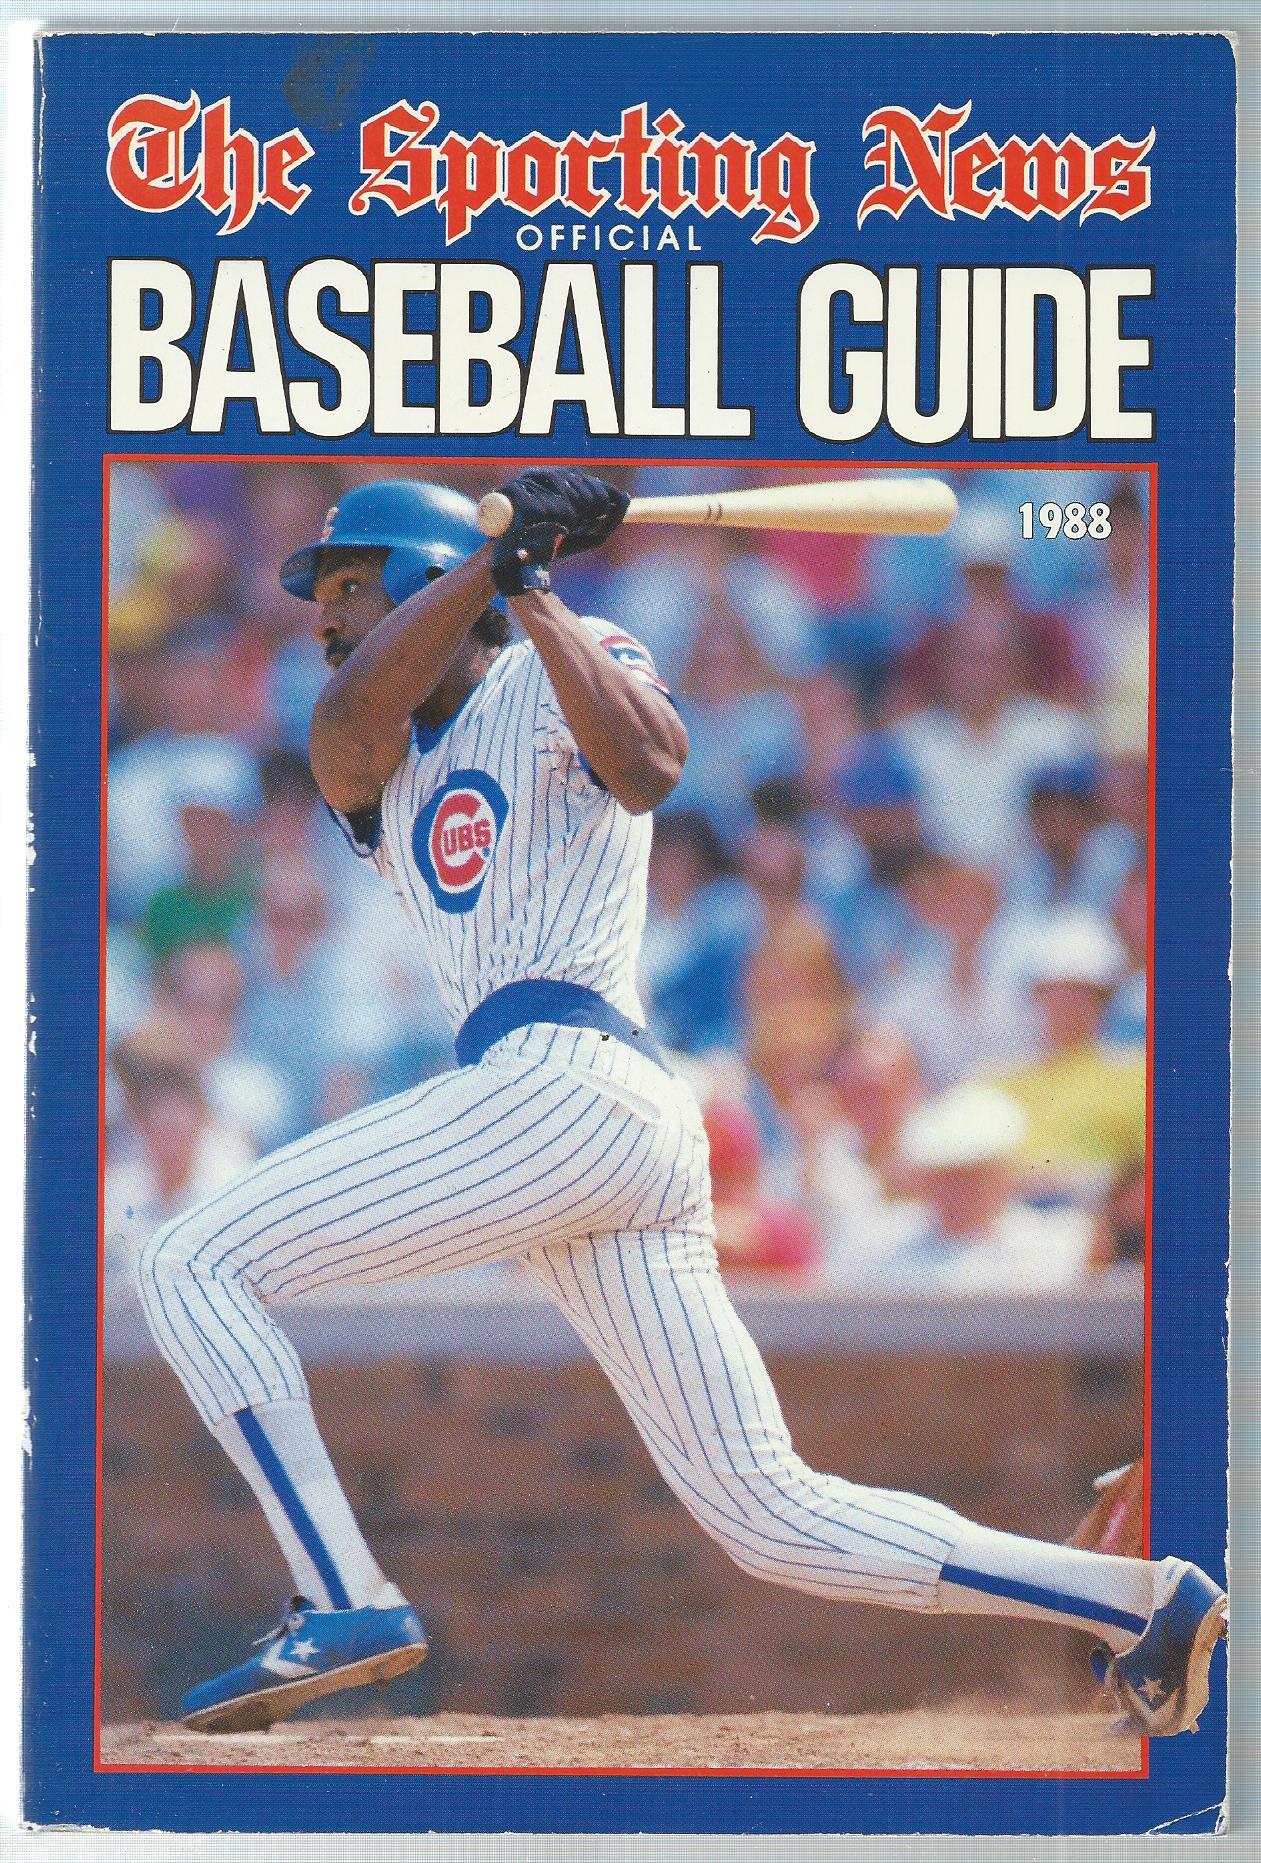 1942-99 The Sporting News Baseball Guide #1988 Andre Dawson